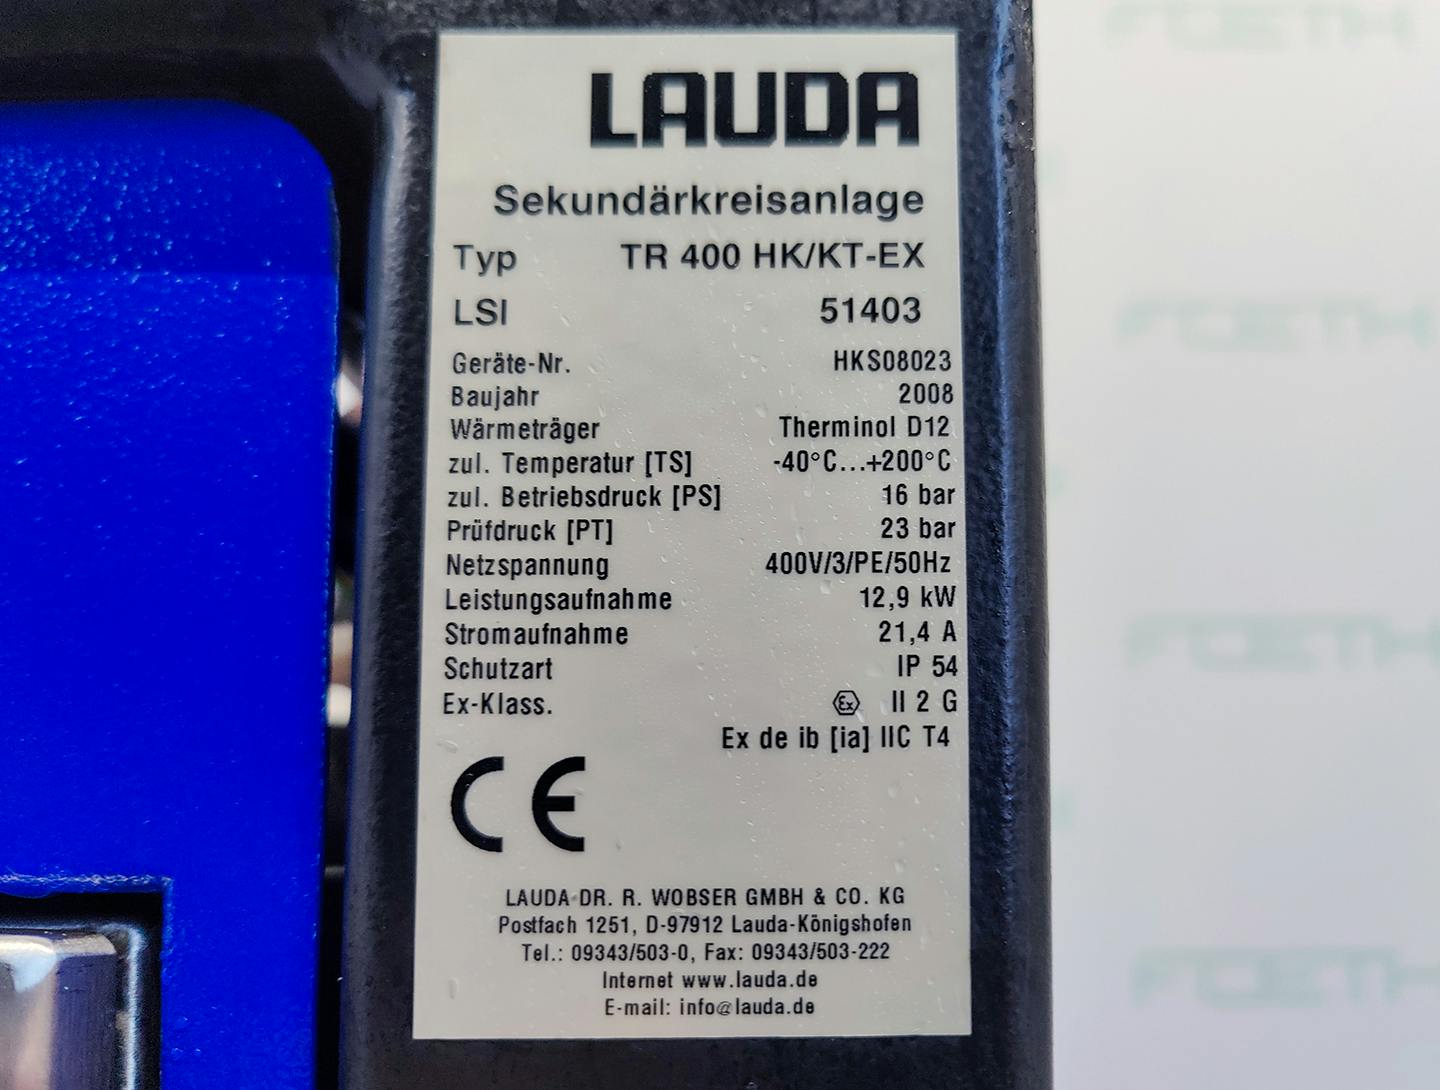 Lauda TR400 HK/KT-EX "secondary circuit system" - Atemperador - image 6